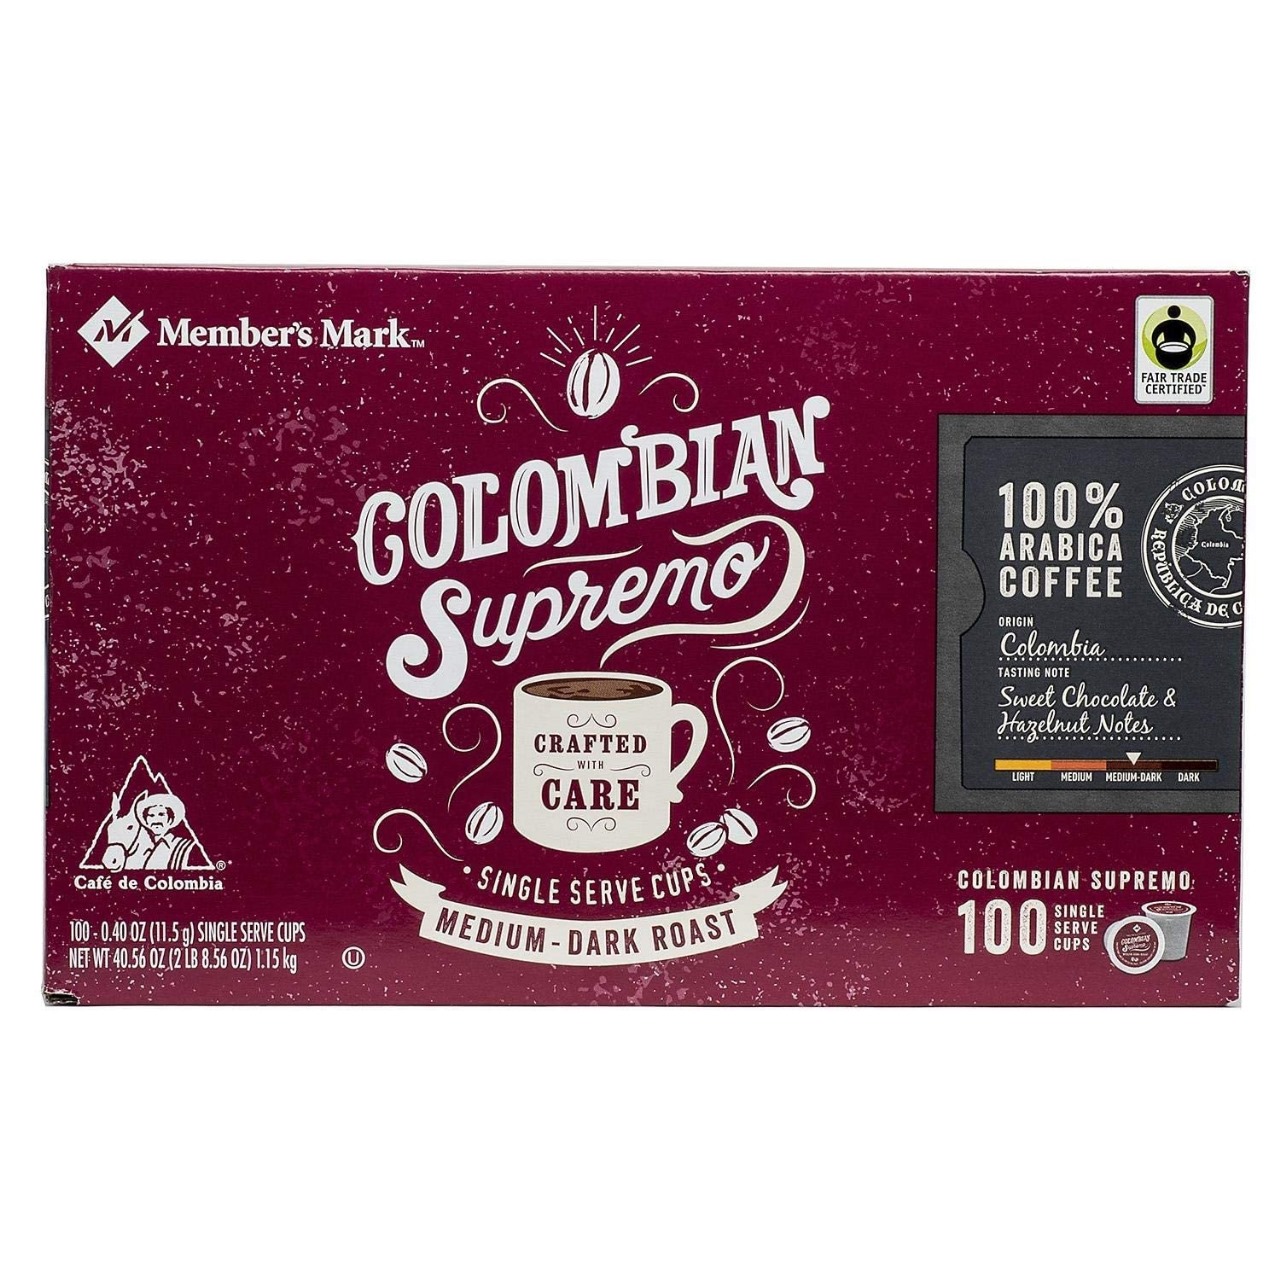 Member's Mark Colombian Supremo COFFEE 100 single-serve cups. A1